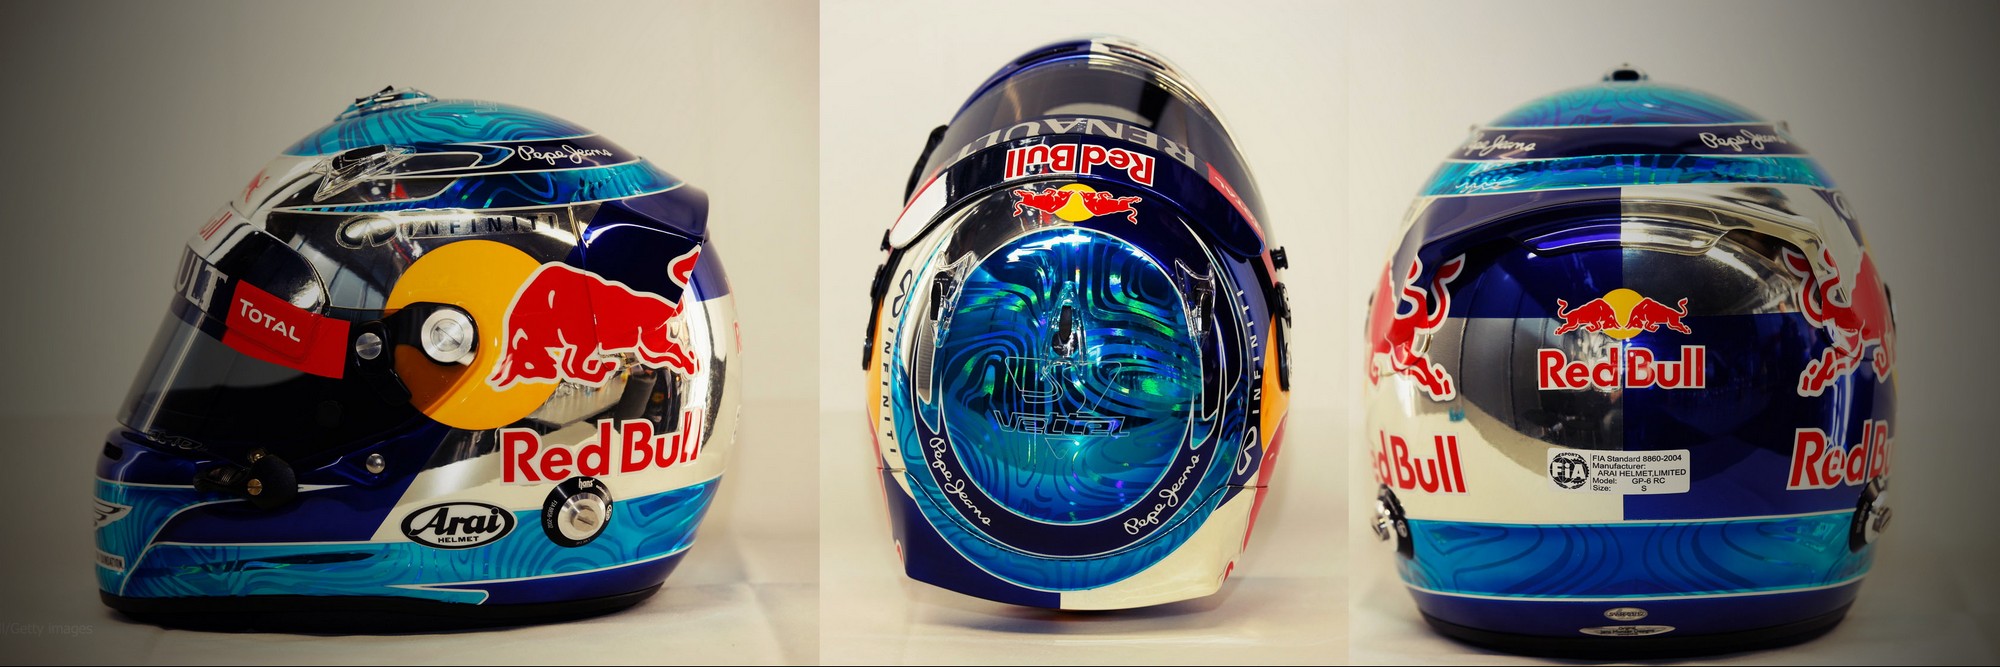 Шлем Себастьяна Феттеля на сезон 2012 года | 2012 helmet of Sebastian Vettel